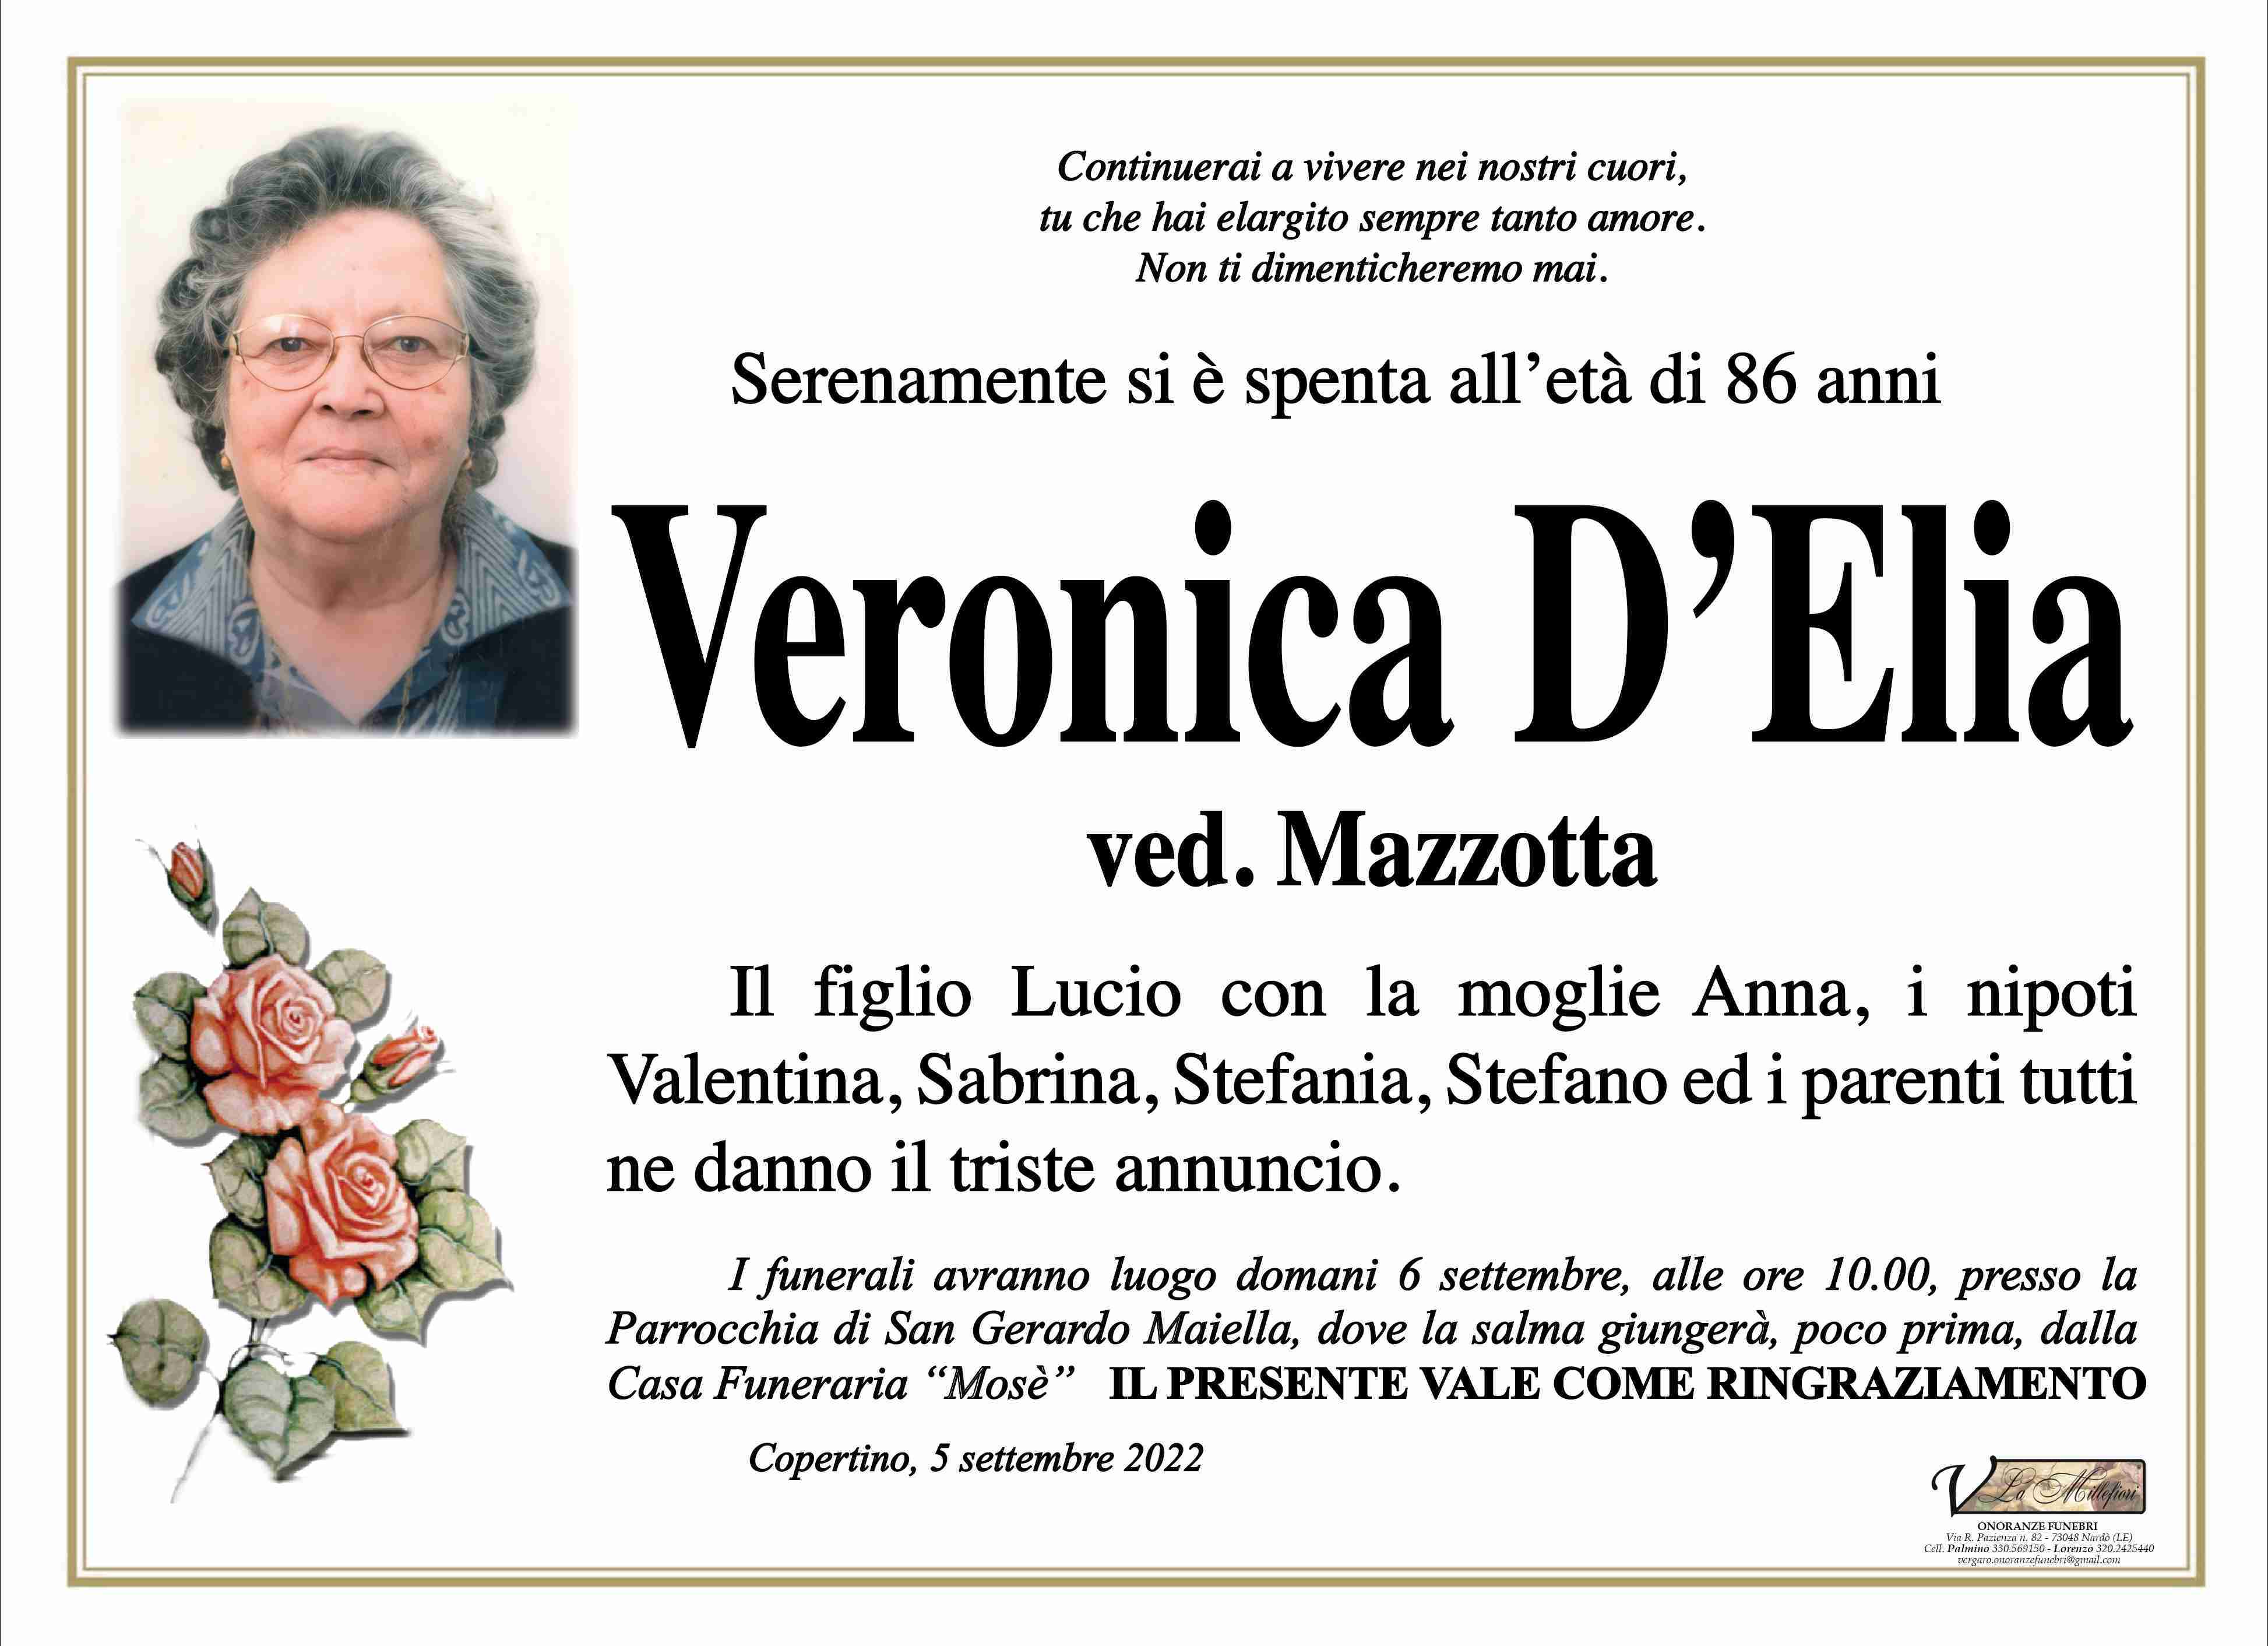 Veronica D'Elia